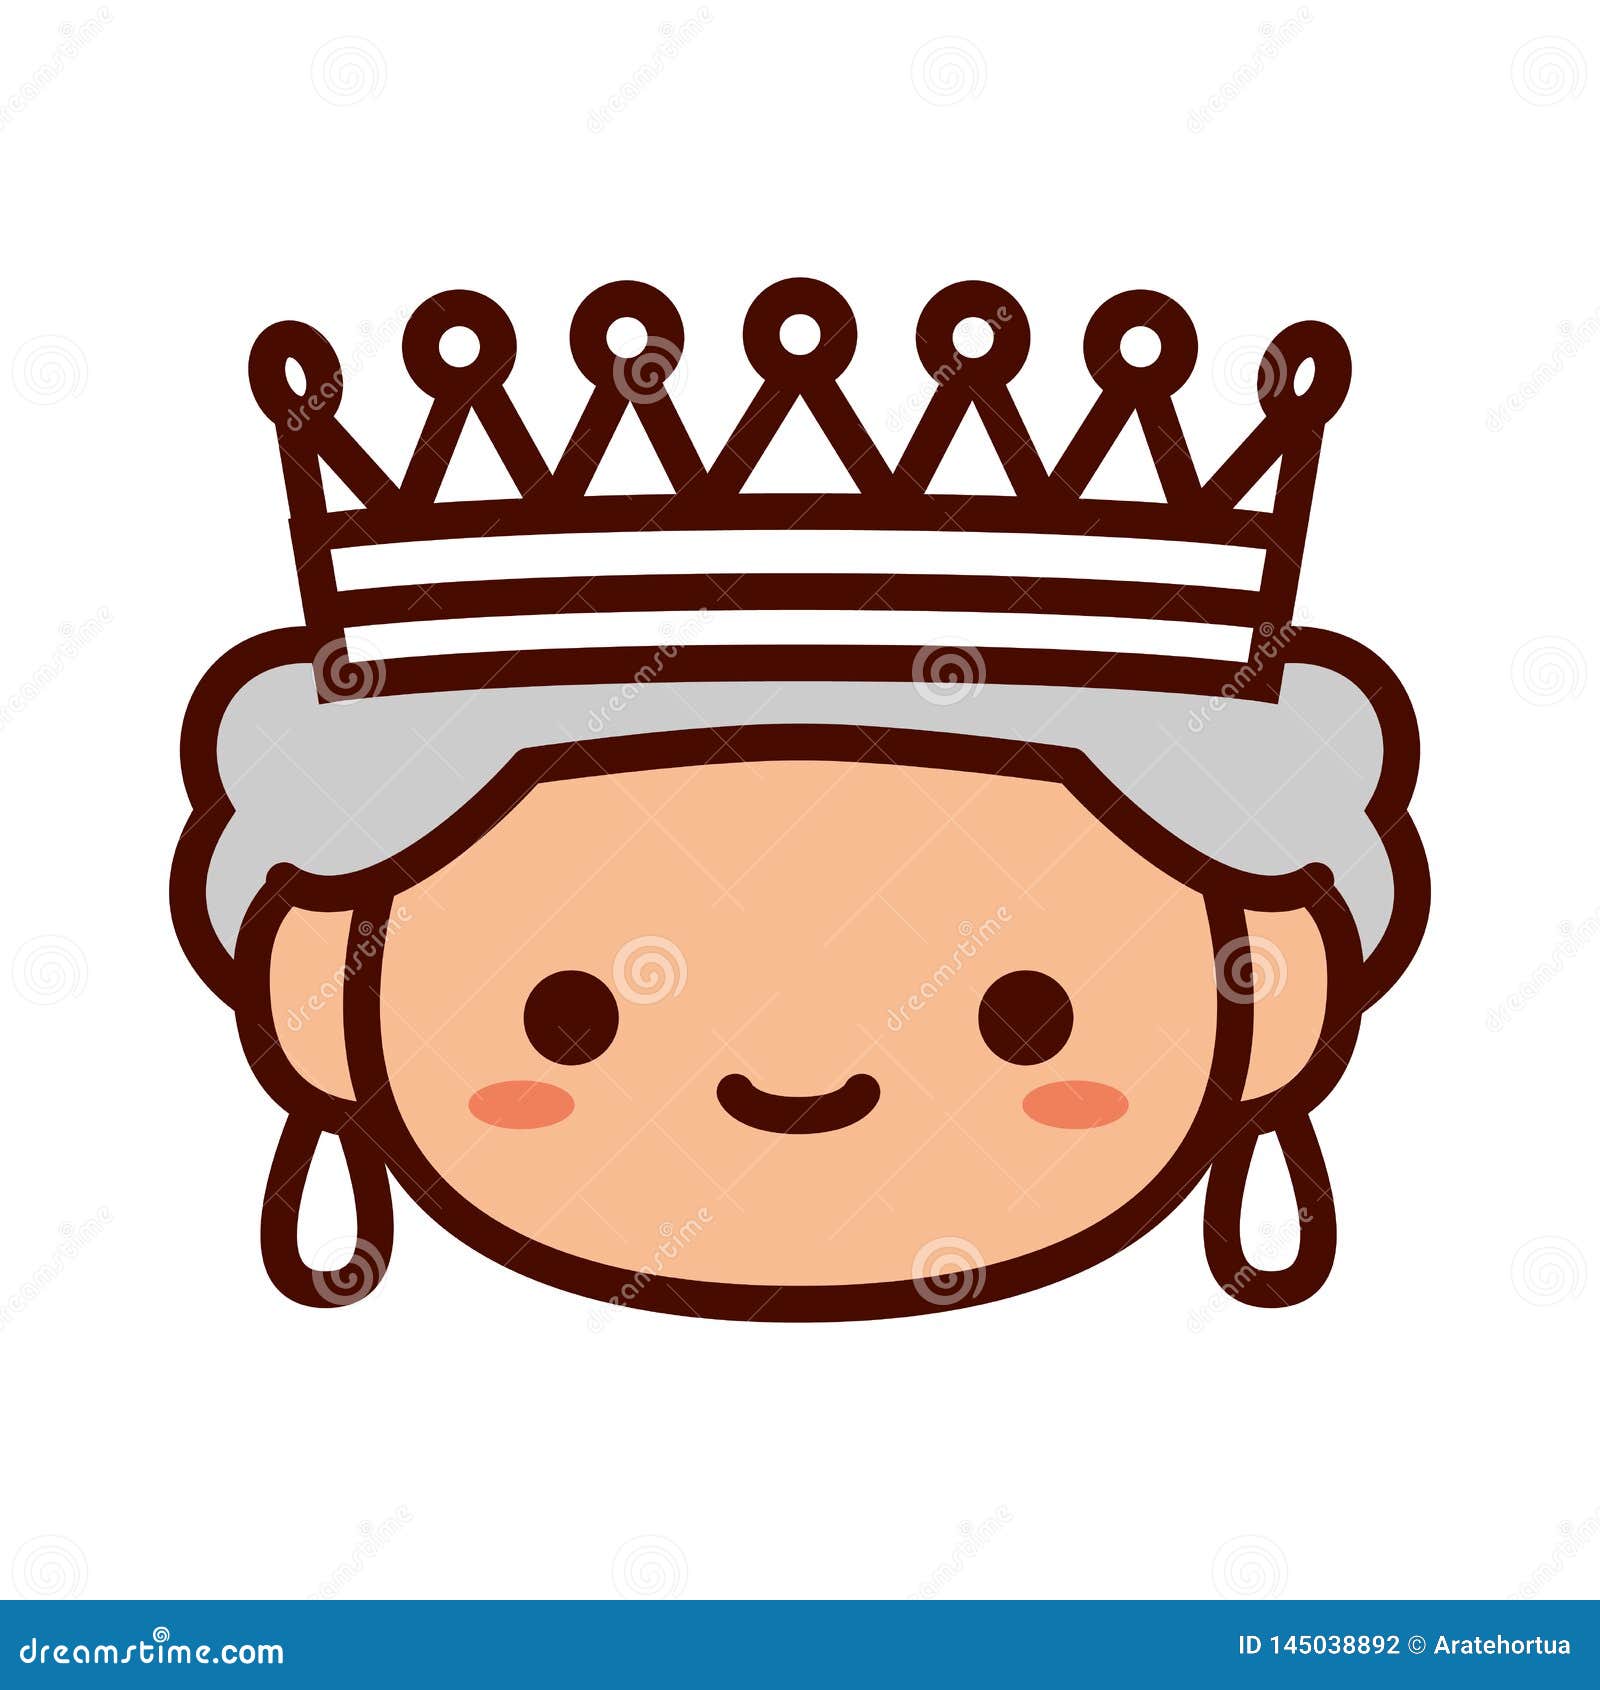 Cartoon picture of the queen